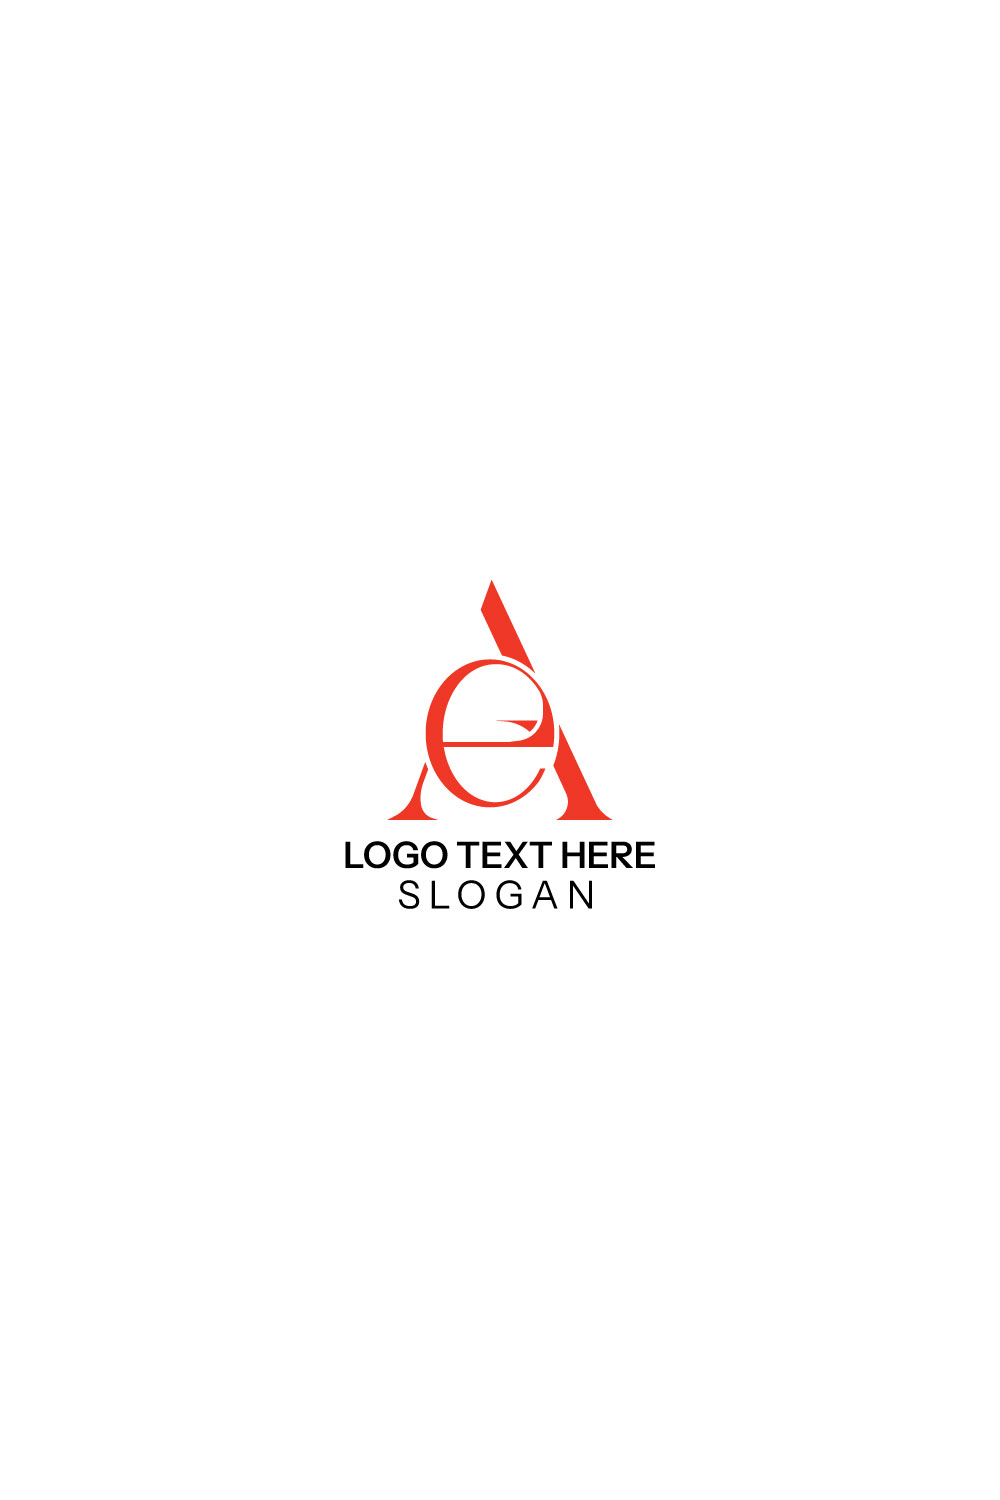 A E Letter Logo Design pinterest preview image.